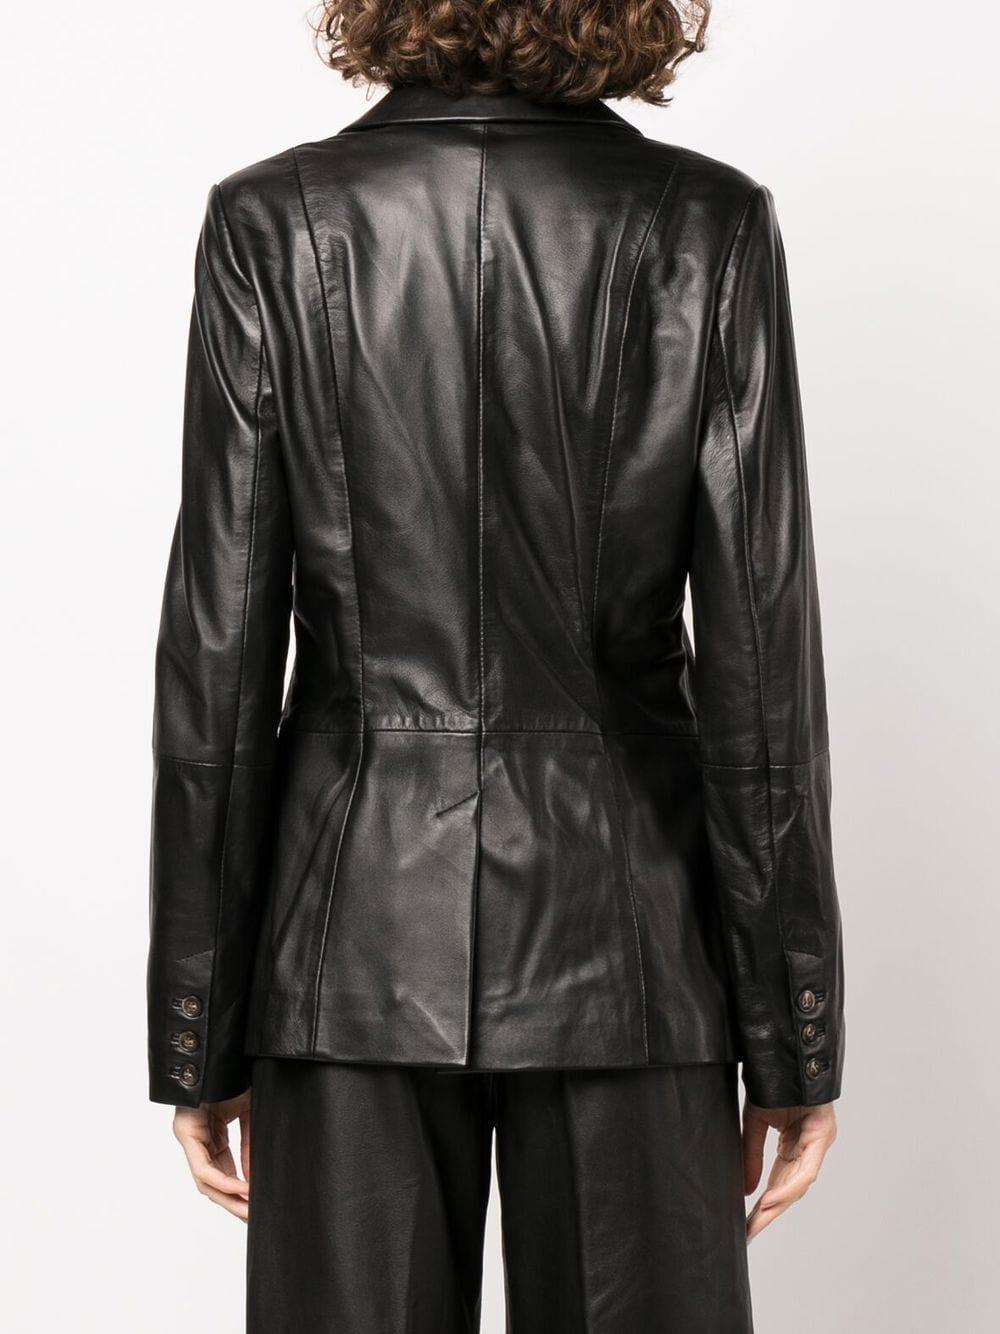 WOMEN FASHION Jackets Blazer Leatherette discount 44% Black S The Five Studio blazer 